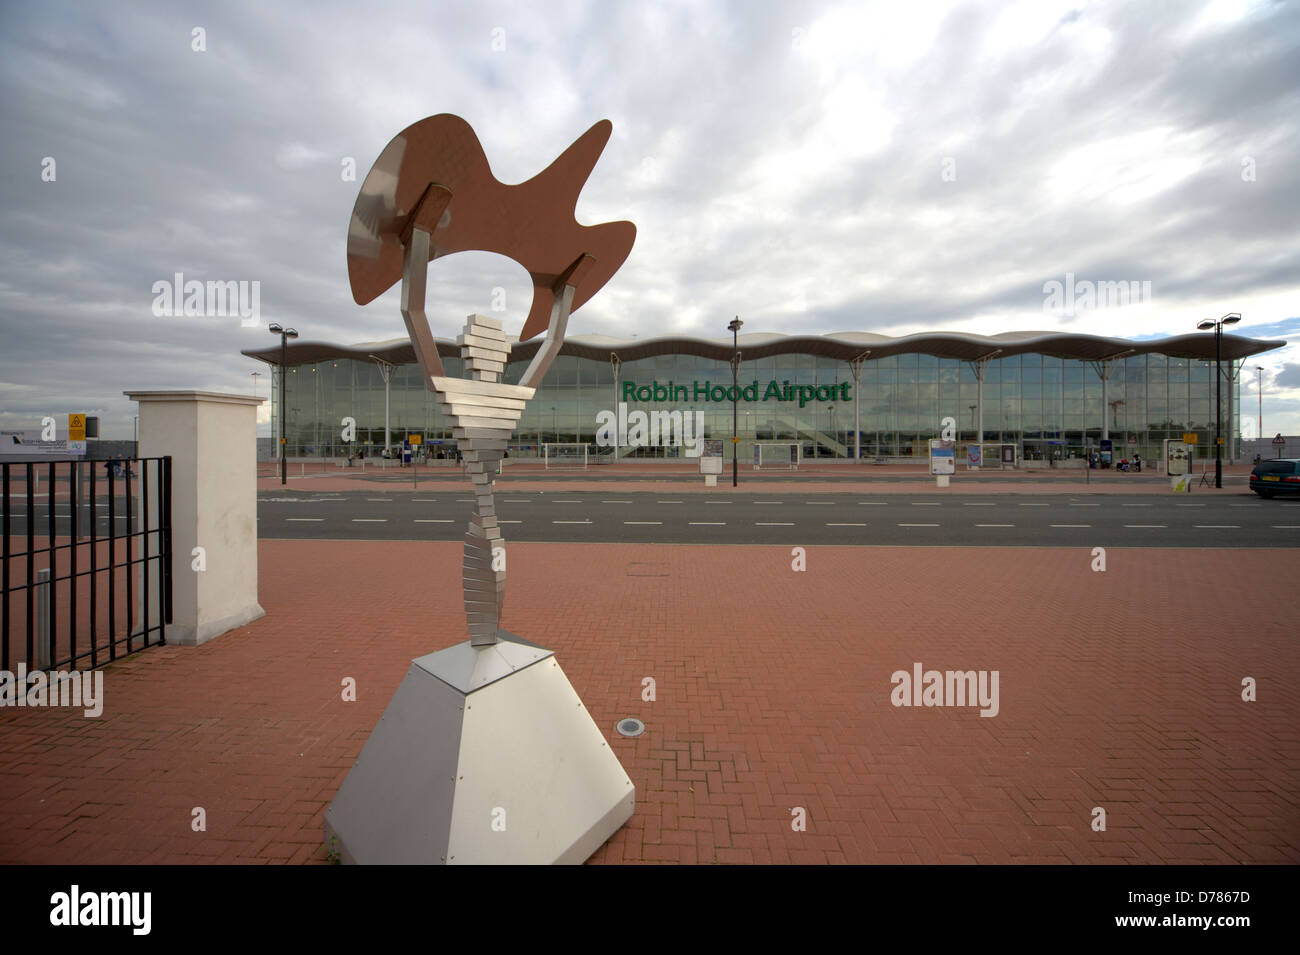 Robin Hood Airport Doncaster Sheffield (IATA: DSA, ICAO: EGCN) is an international airport Stock Photo